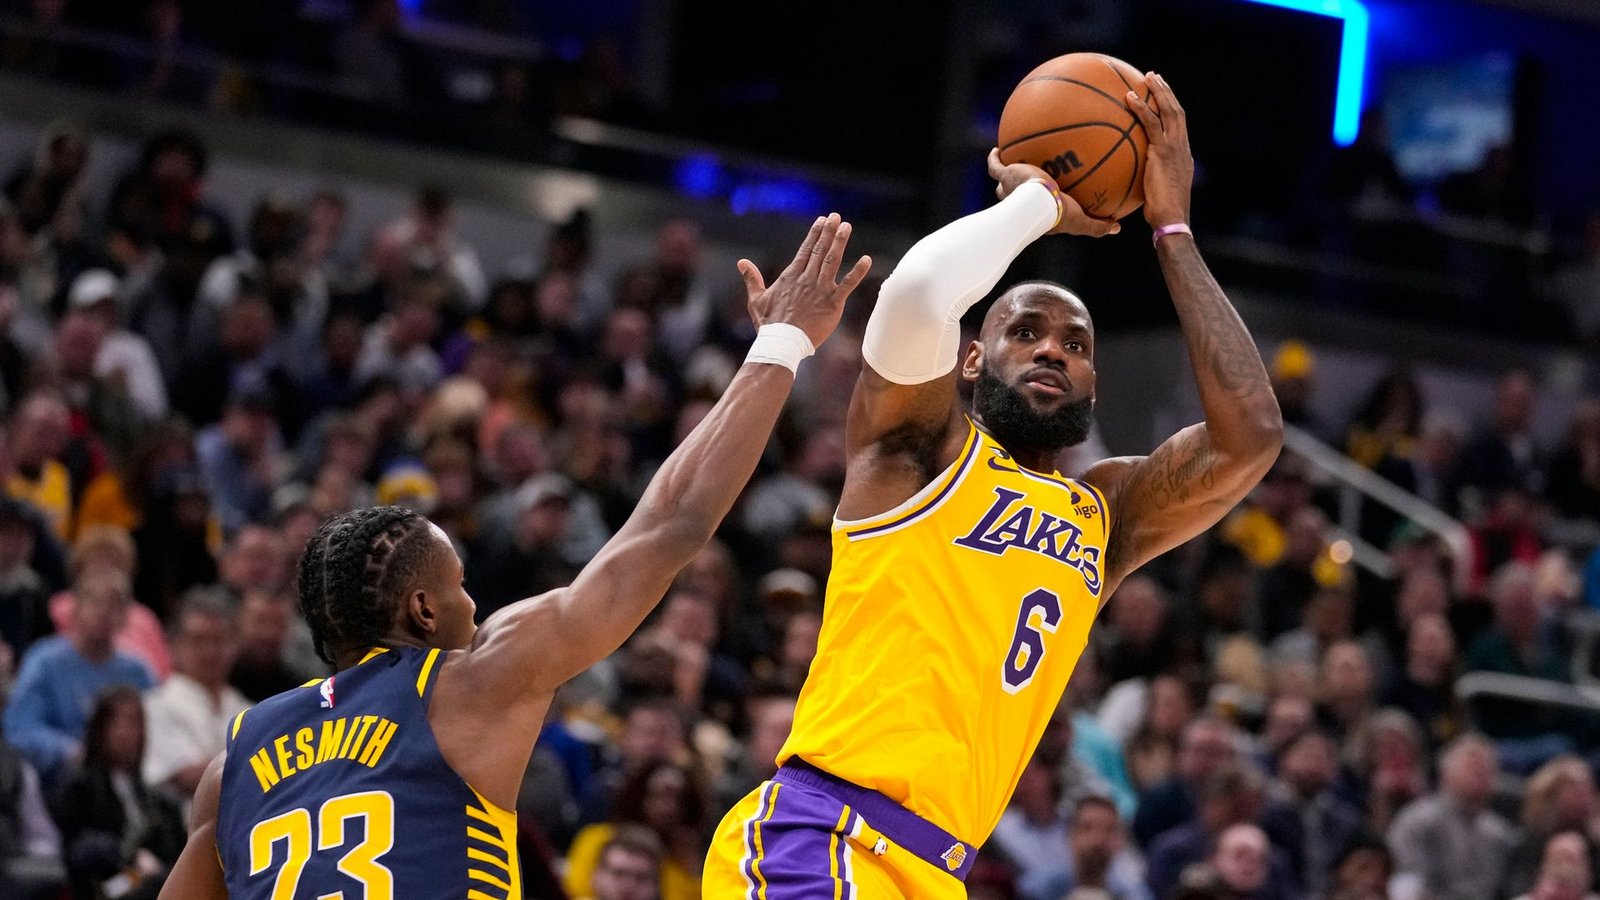 Überragender Lakers-Spieler beim Sieg über die Pacers: LeBron James (r).Foto: Michael Conroy/AP/dpa